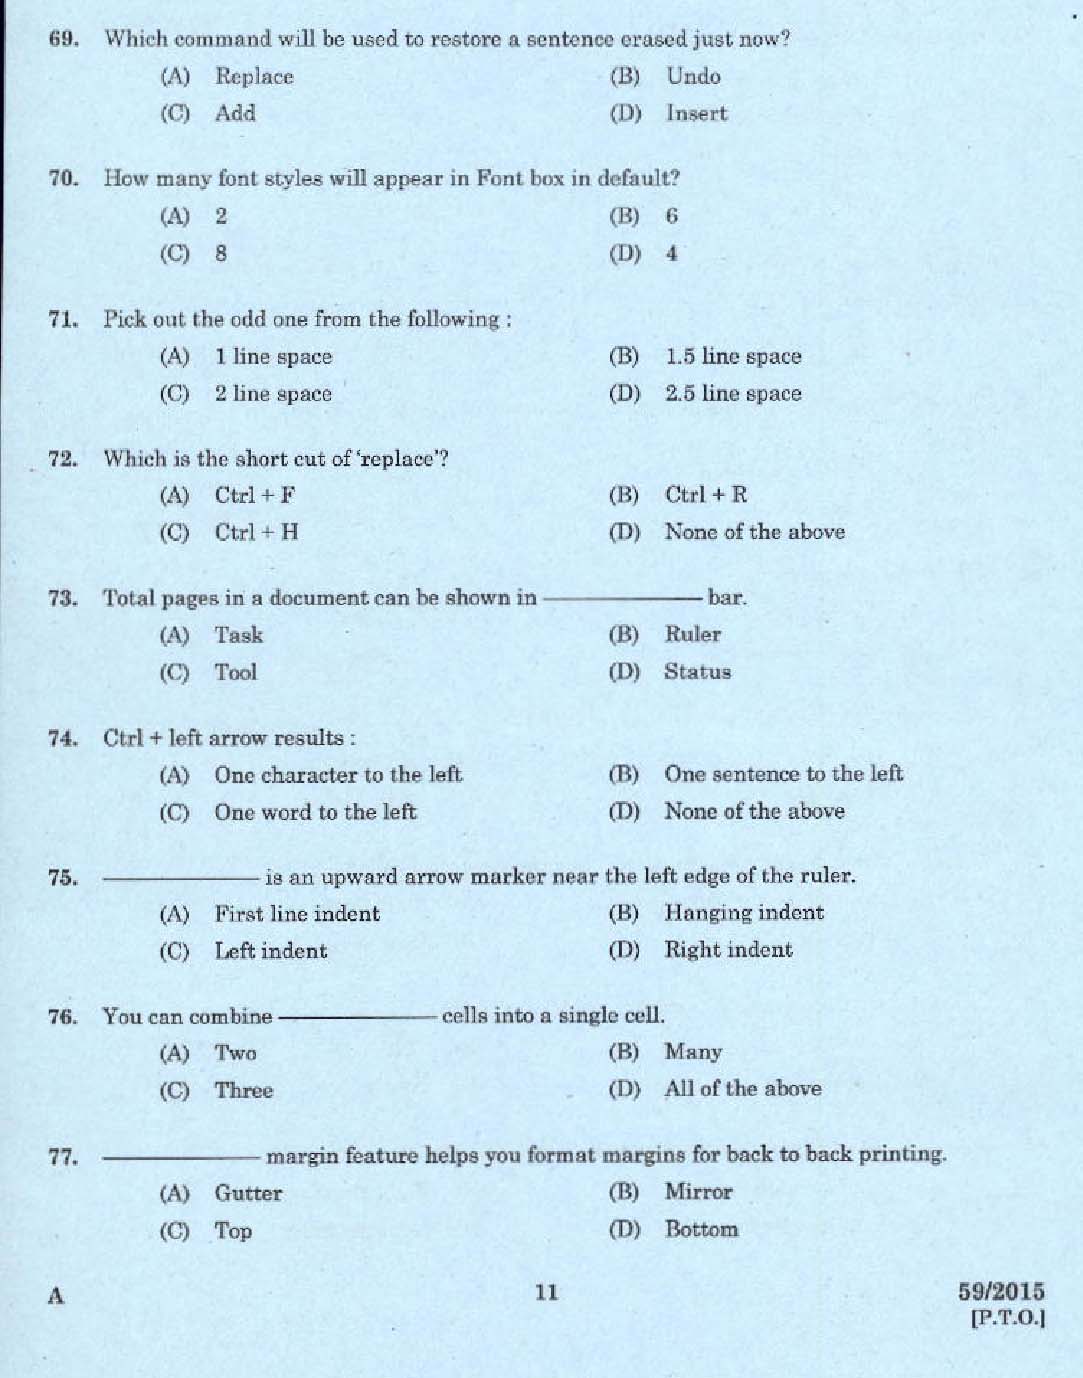 Kerala PSC Malayalam Stenographer Exam 2015 Question Paper Code 592015 9